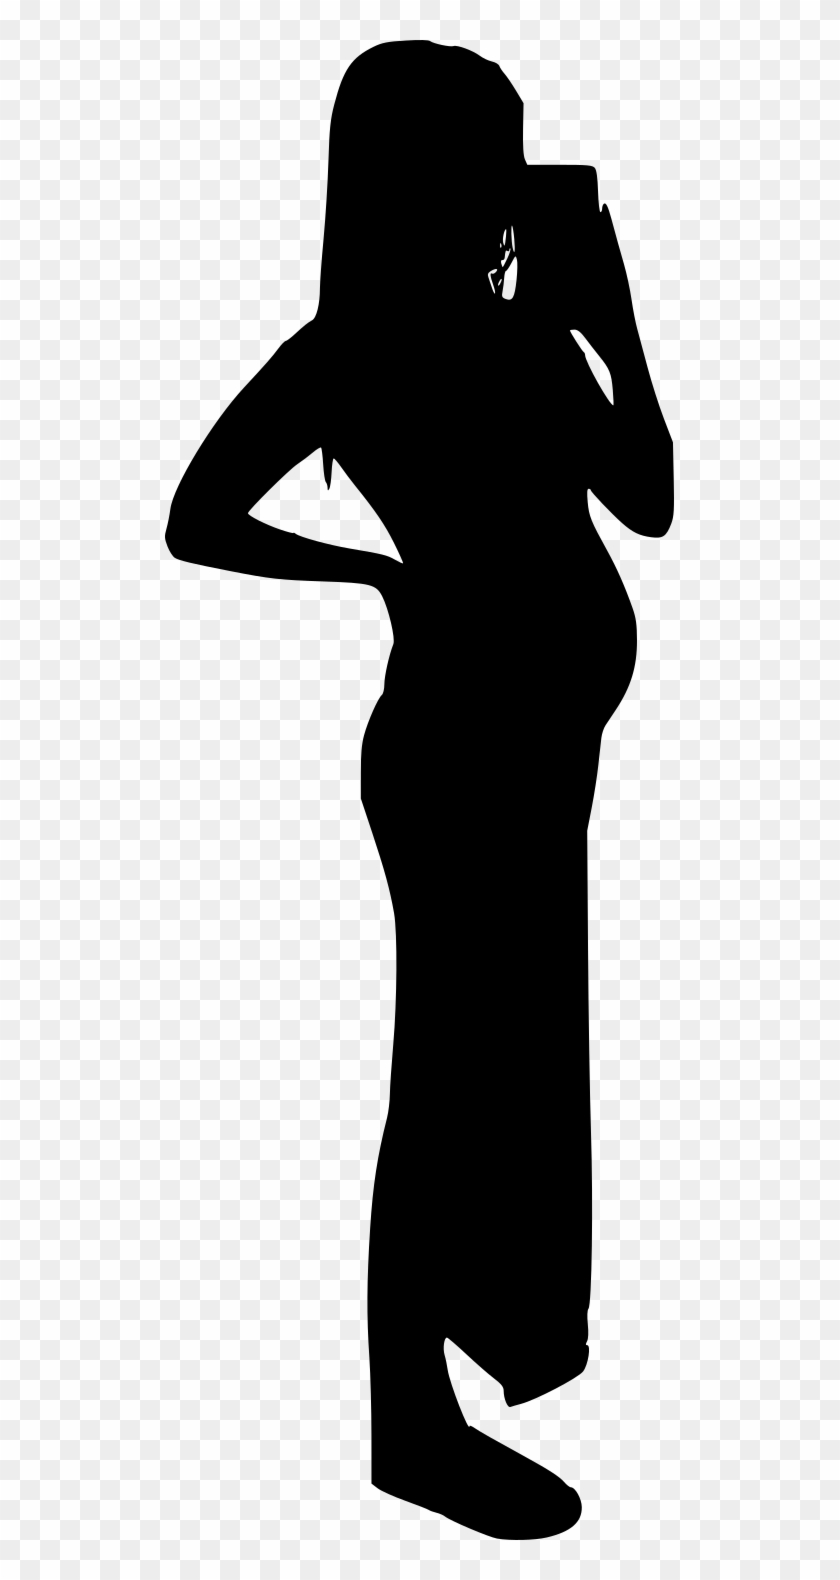 Pregnant Woman Silhouette Clipart - Silhouette #371181